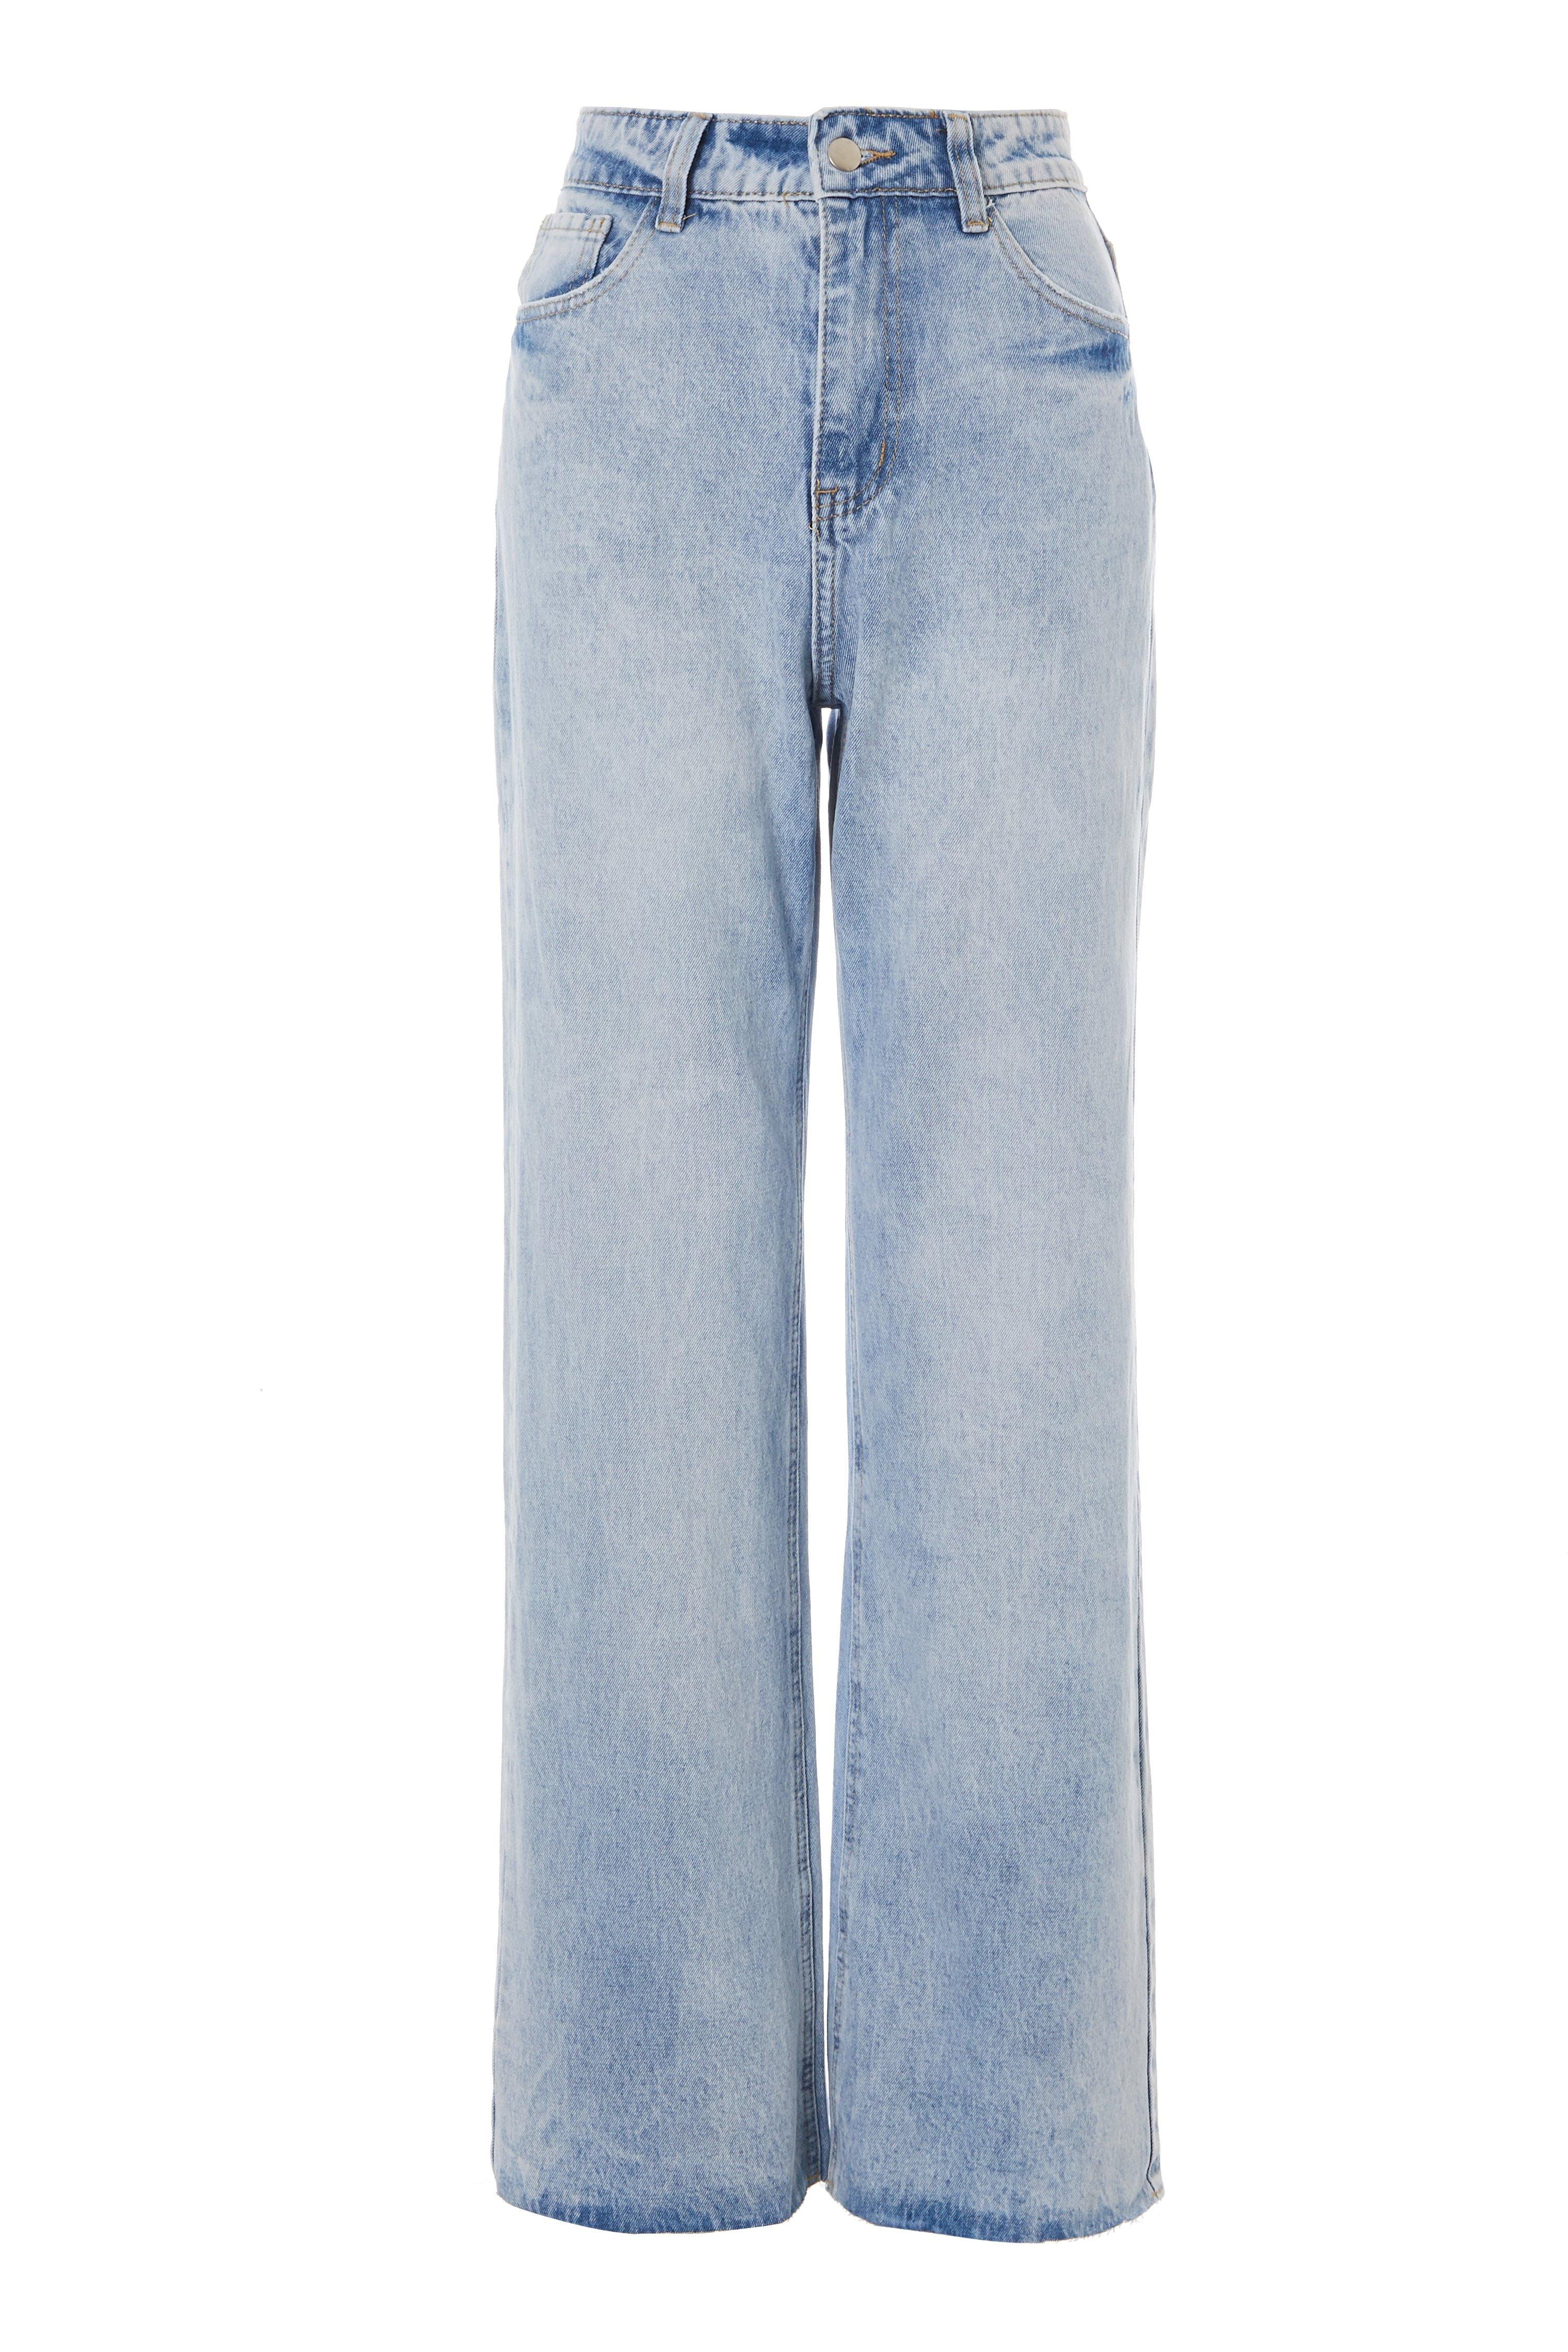 Blue Denim Dad Jeans - Quiz Clothing